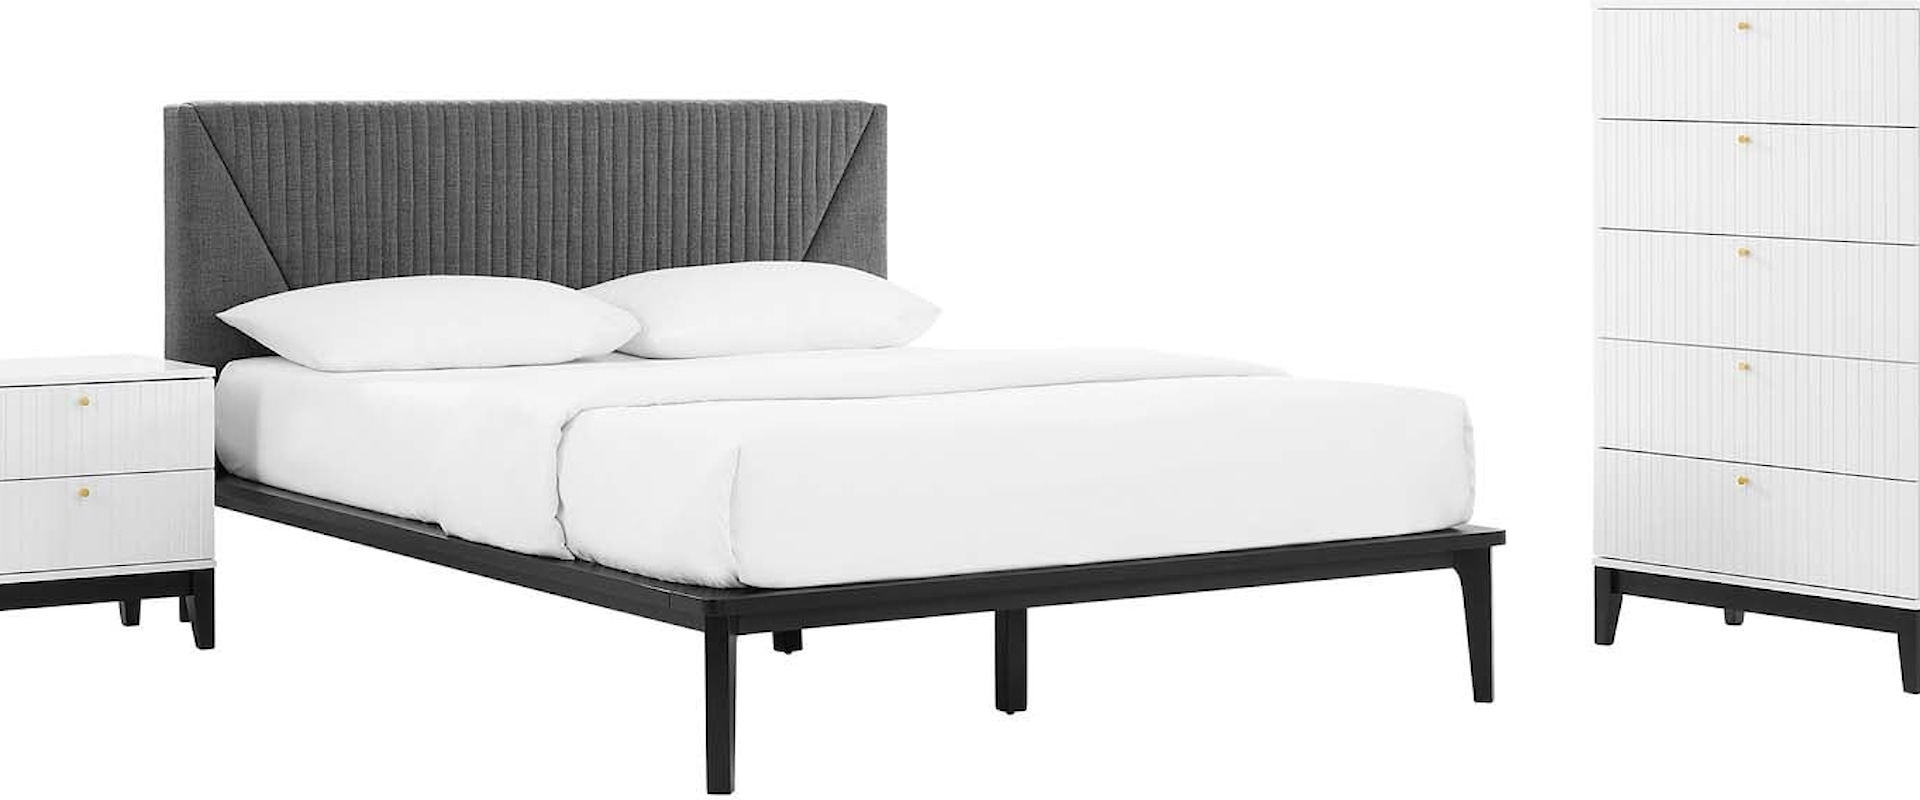 Dakota 3 Piece Upholstered Bedroom Set